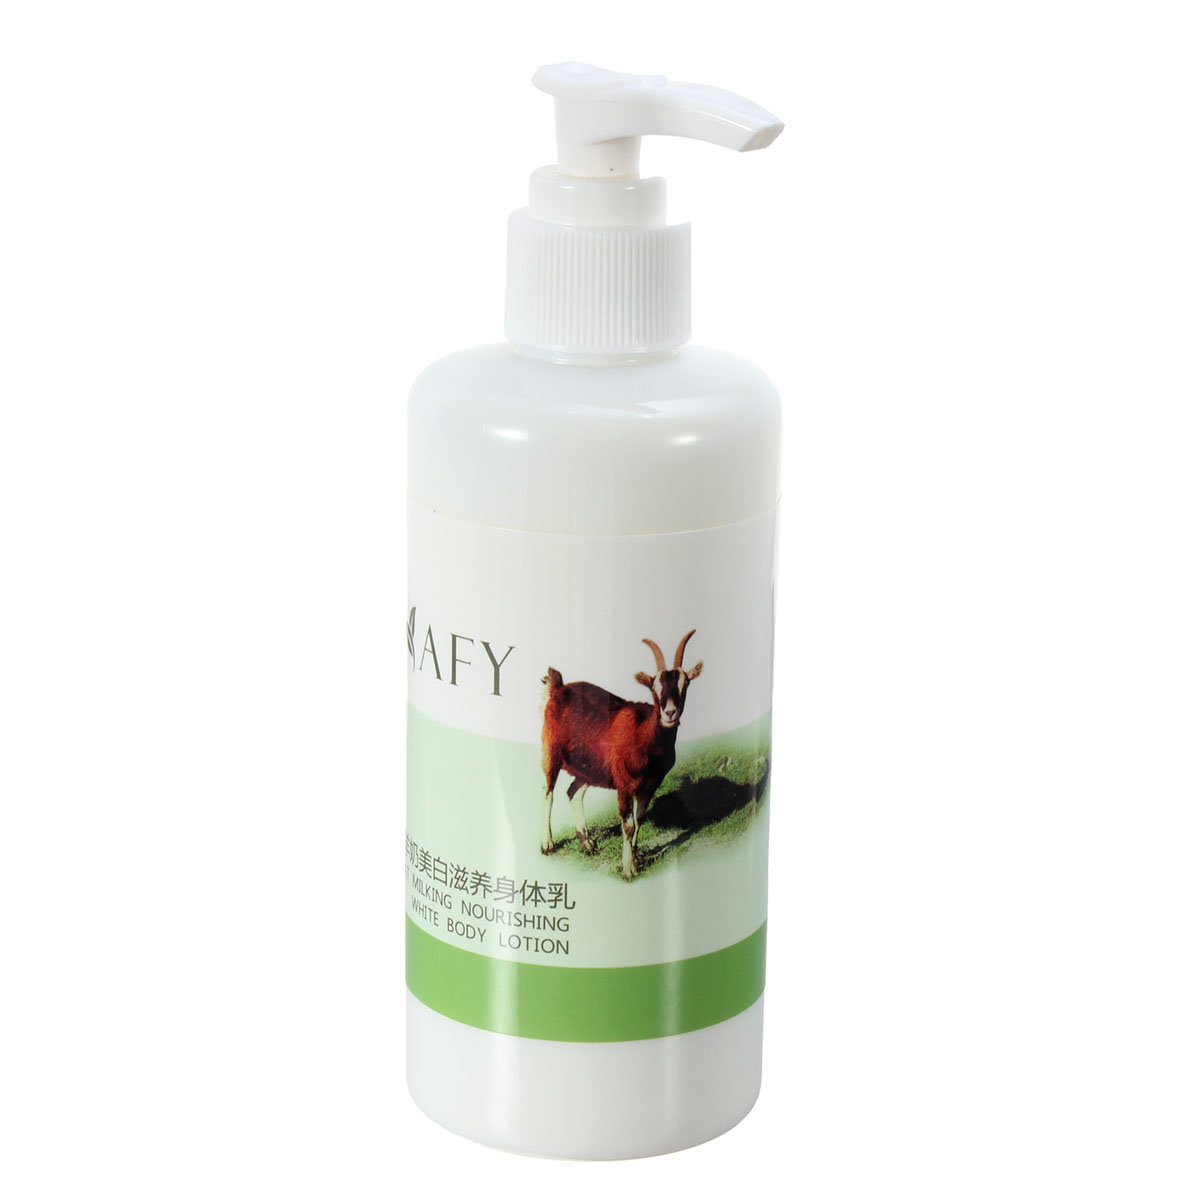 

AFY Goat Milk Milking Nourishing Moisturizing Whitening Body Lotion Cream